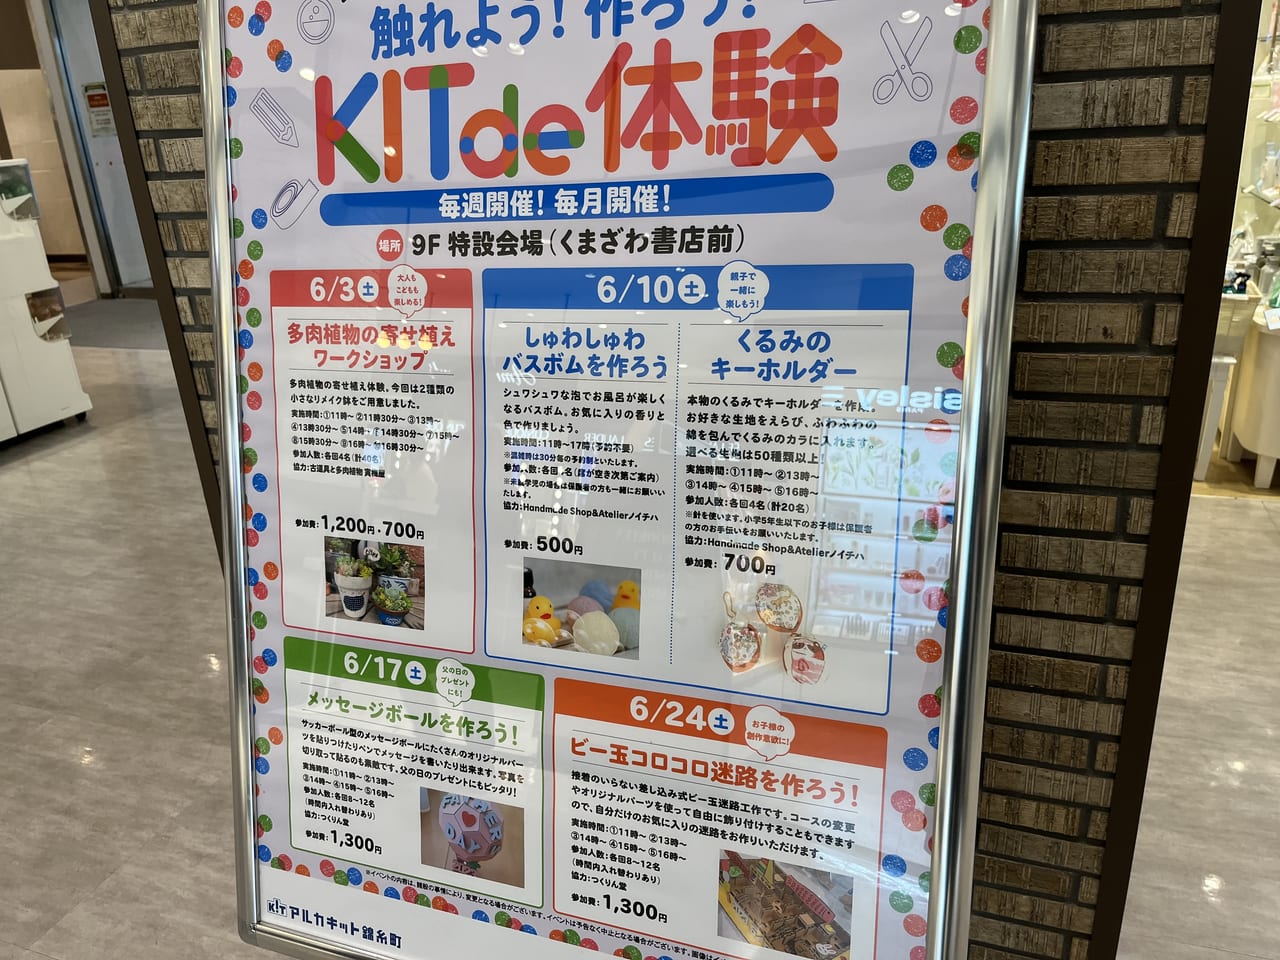 KITDE体験202306